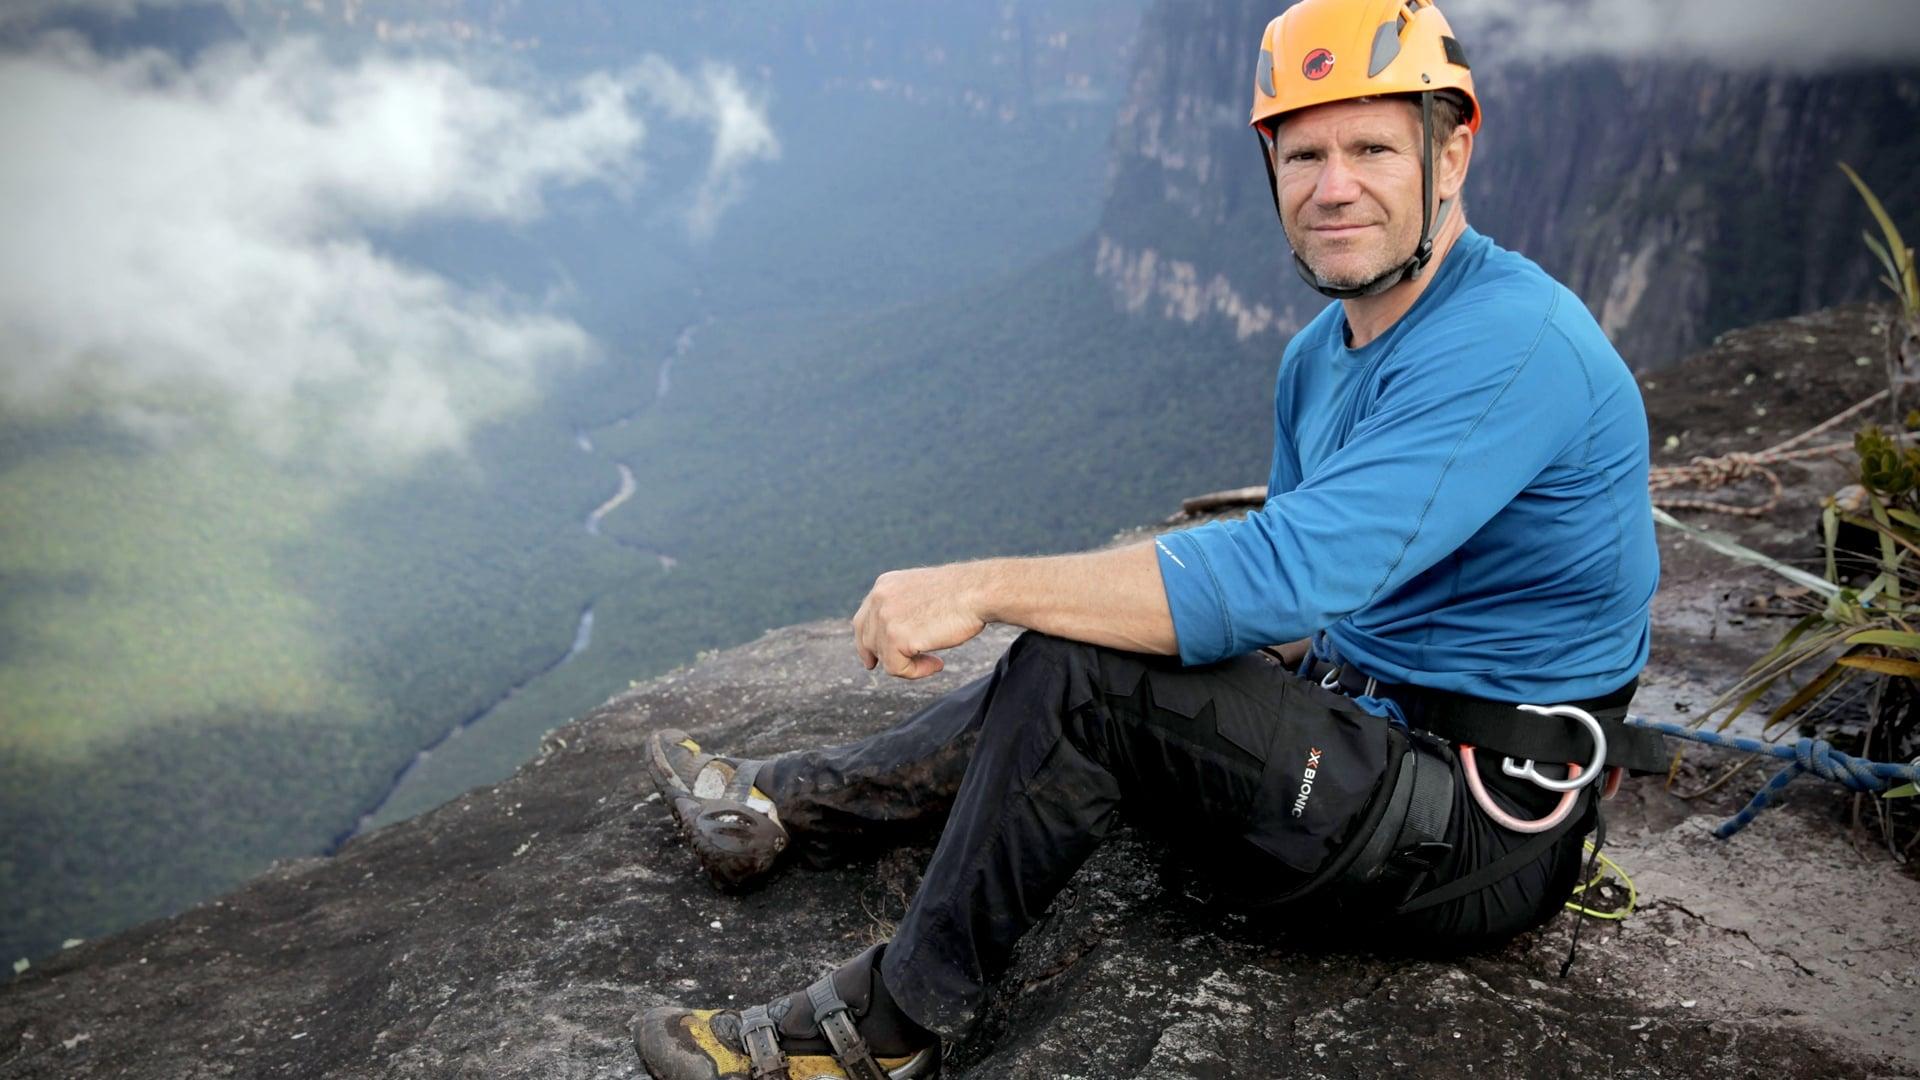 Steve Backshall's Extreme Mountain Challenge backdrop